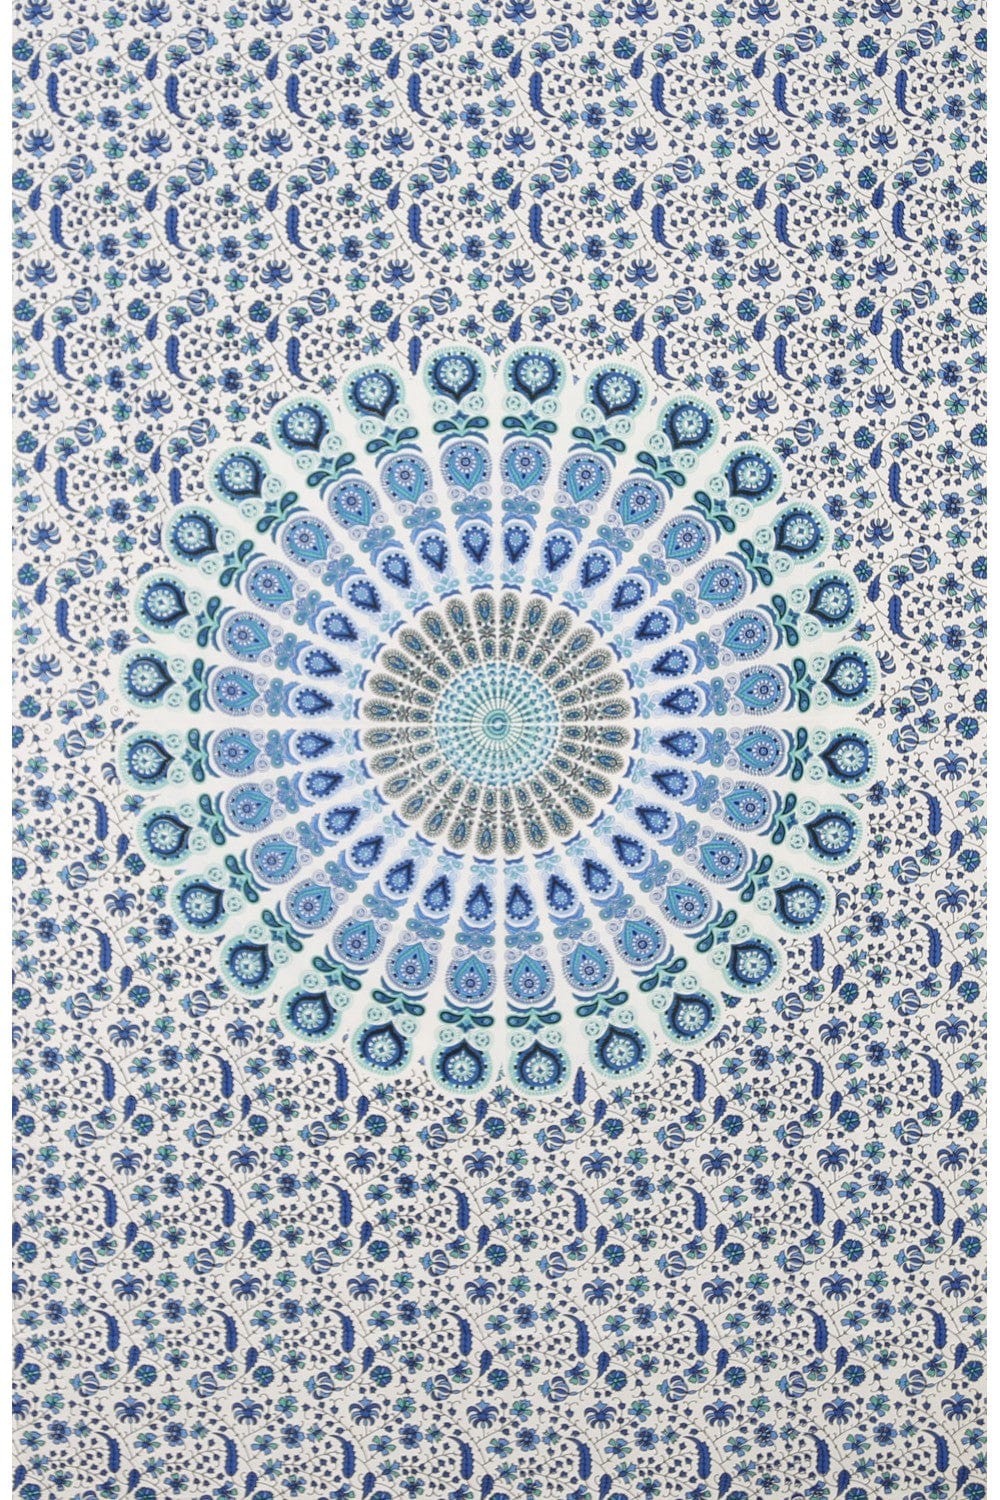 Tapestries Flowering Peacock Mandala - Blue and White - Tapestry 102317